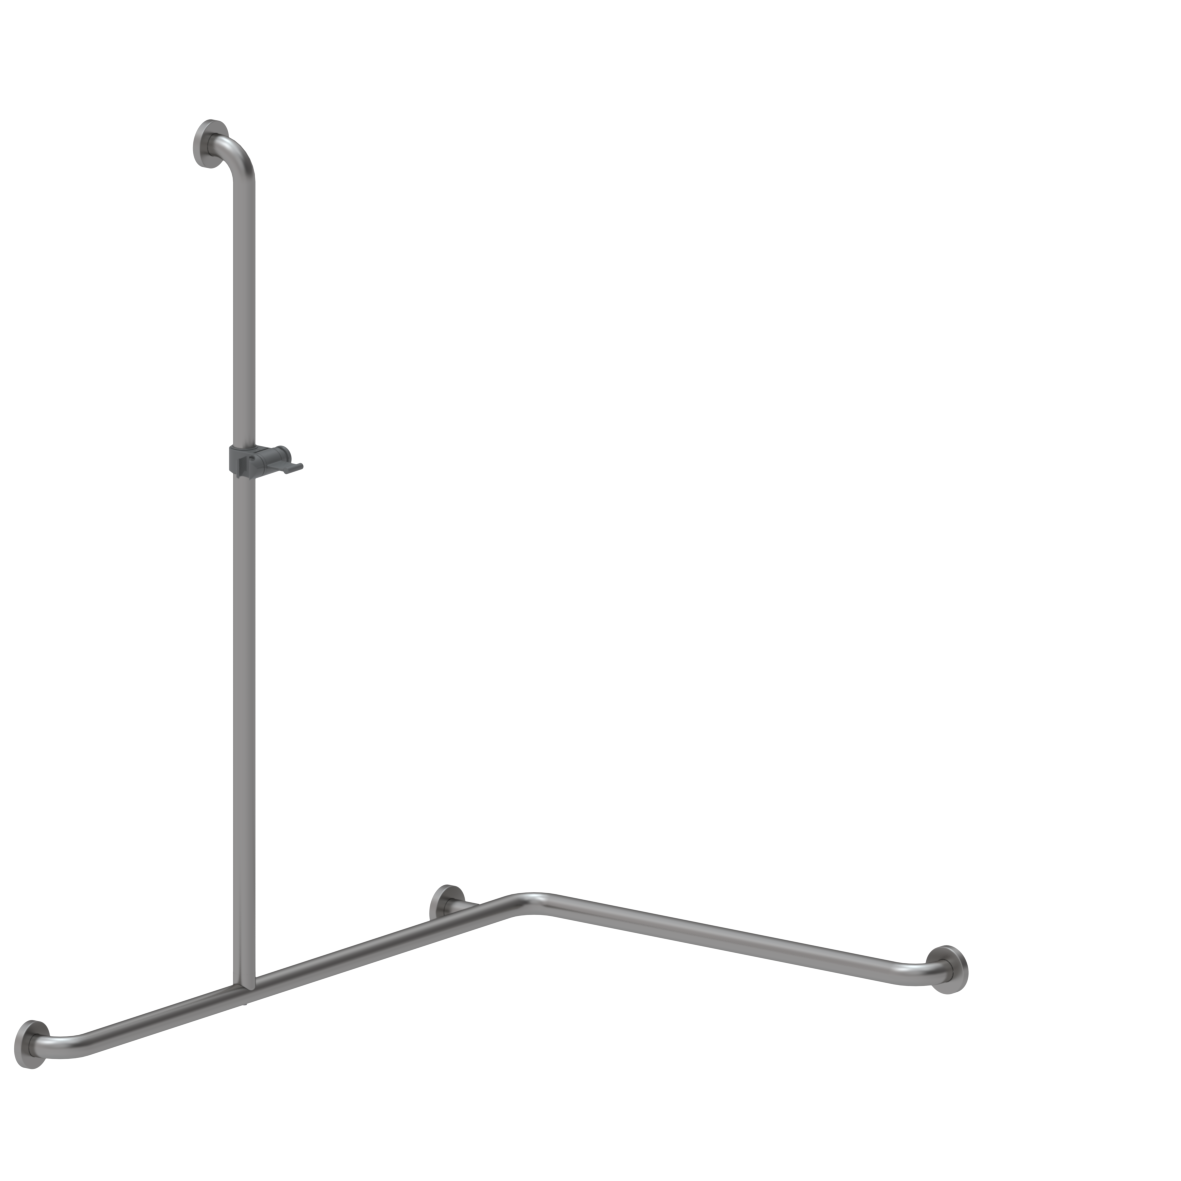 Inox Care Shower handrail, with shower head rail central, left, 750 x 1100 x 1200 mm, Stainless steel, shower head holder, colour dark grey (018)